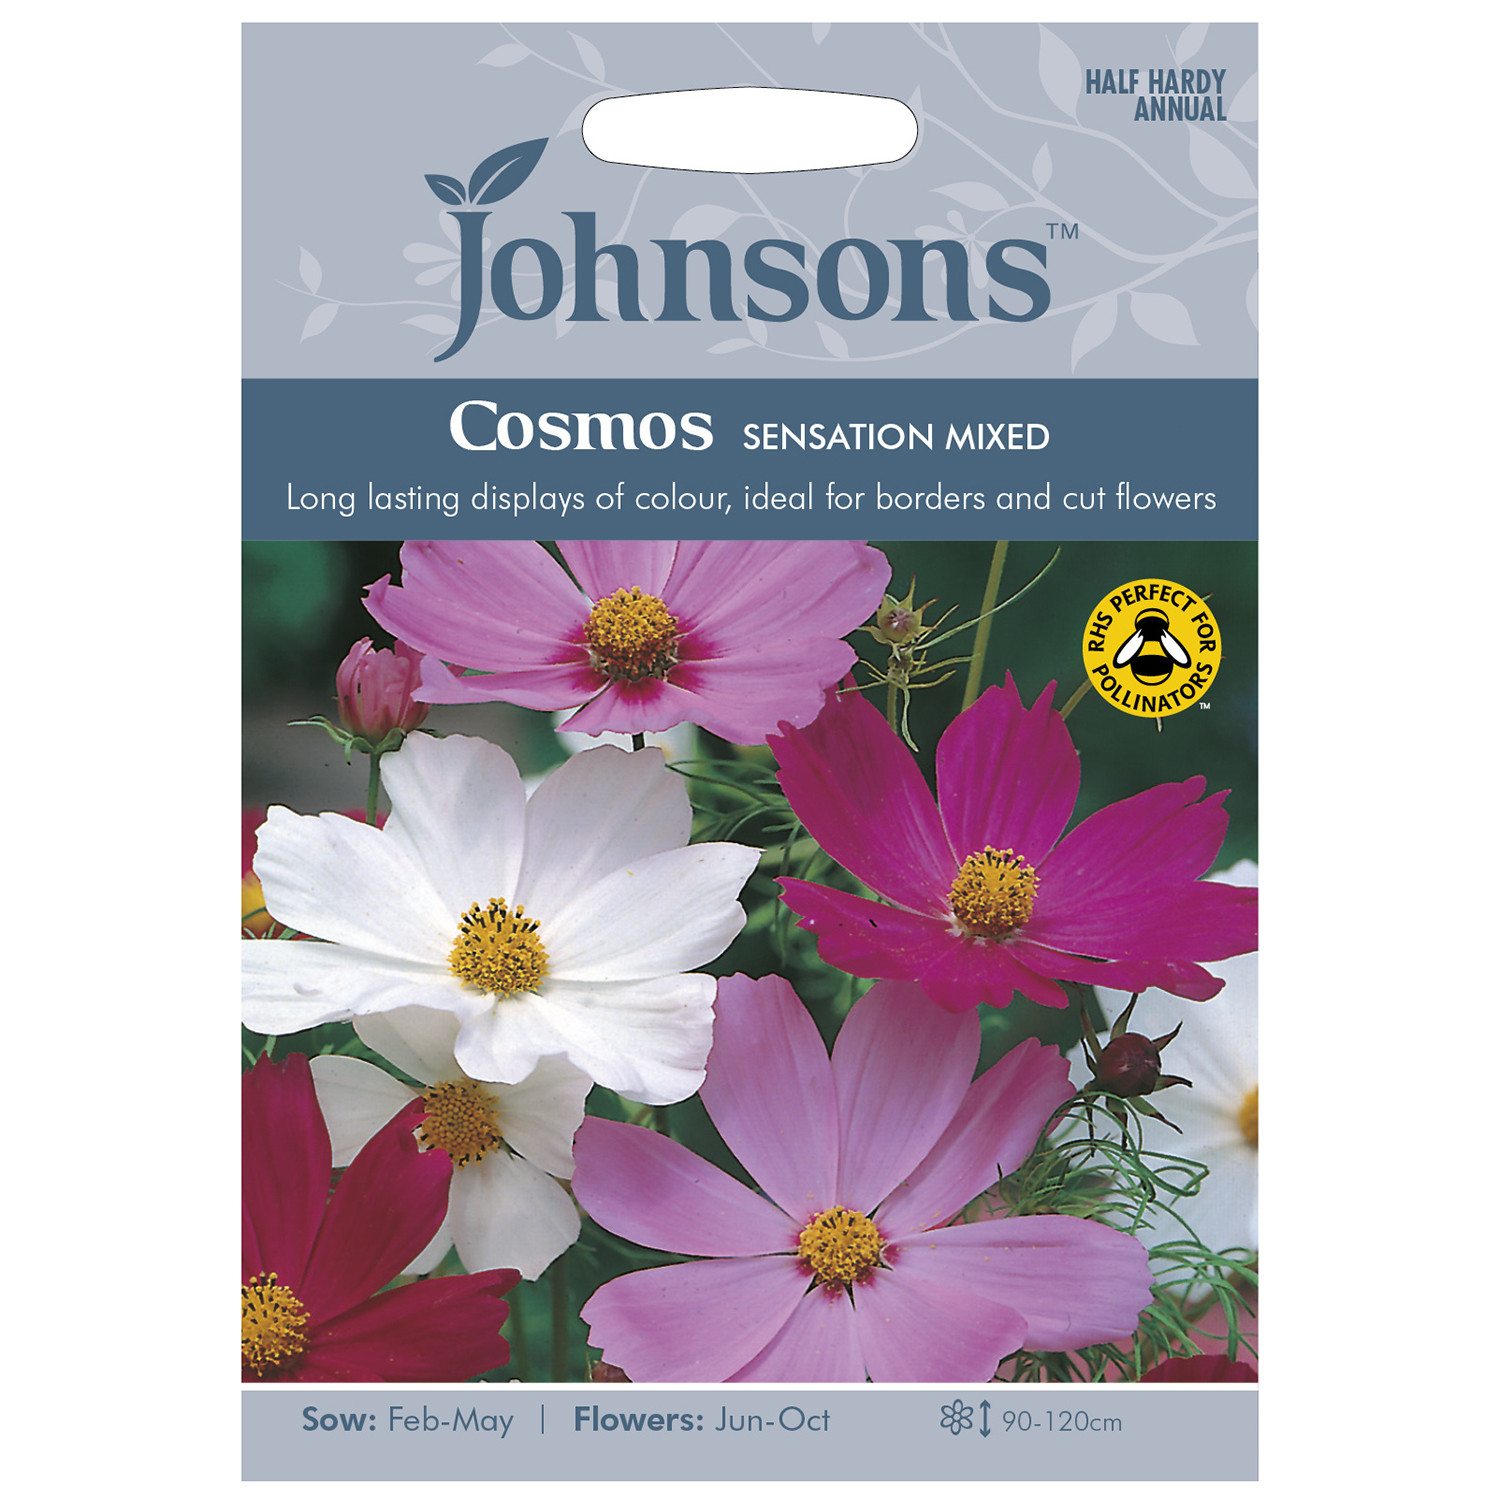 Johnsons Cosmos Sensation Mixed Flower Seeds Image 2